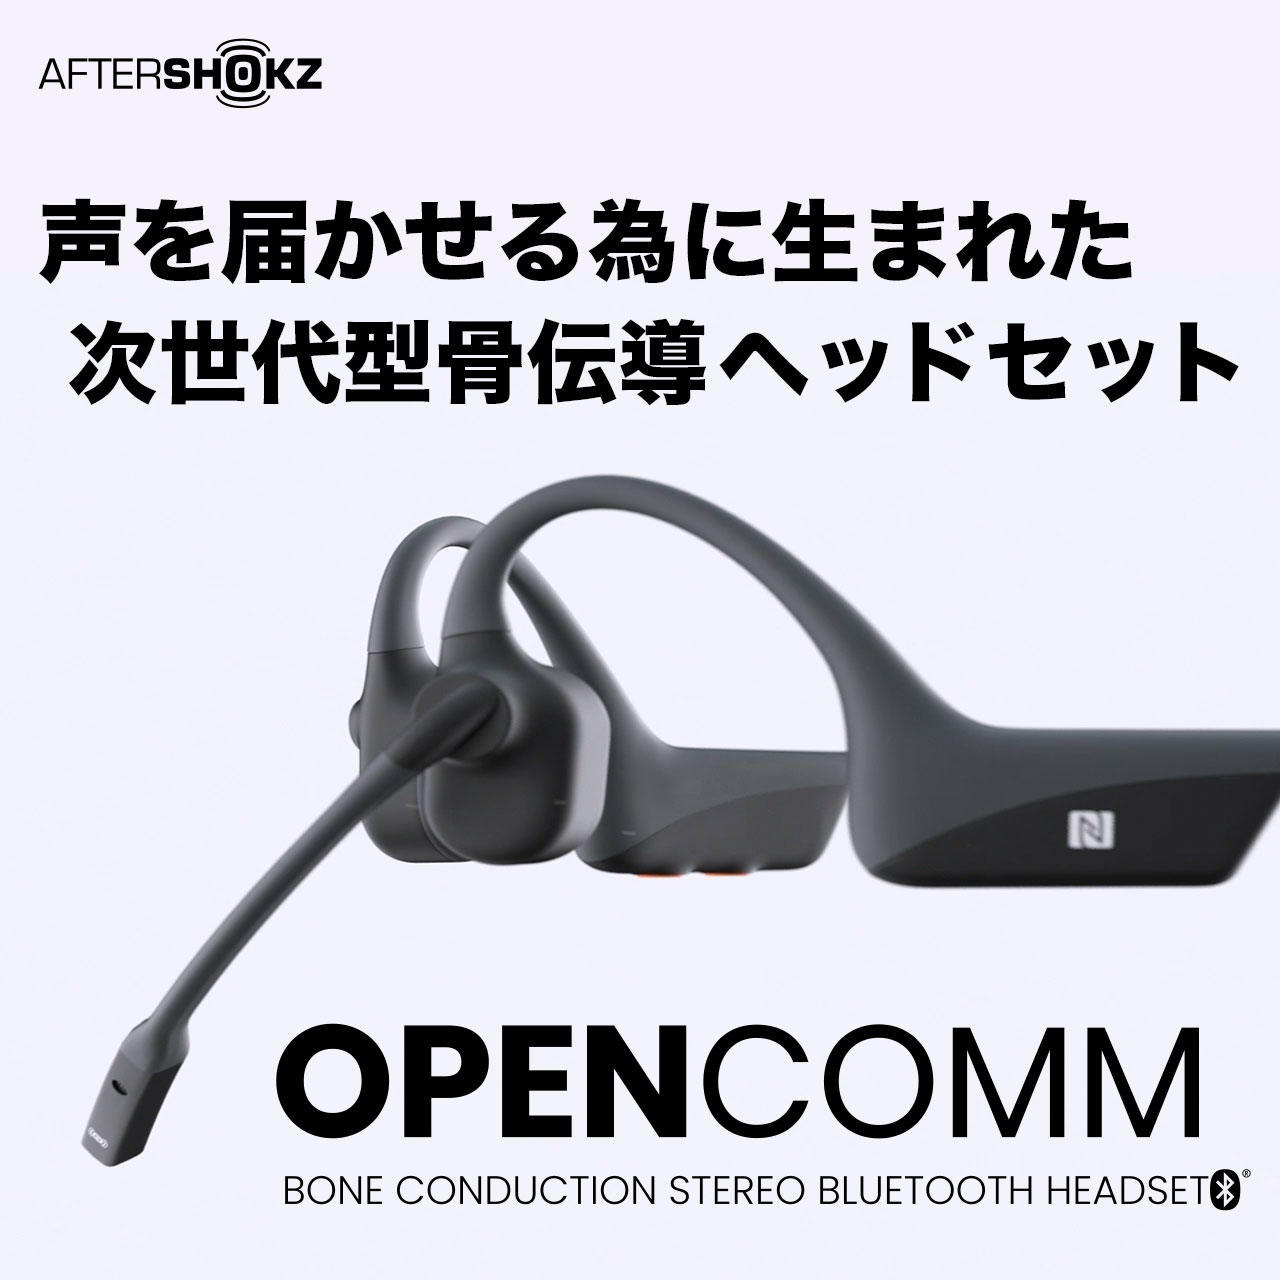 AfterShokz OPENCOMM BLACK 骨伝導ヘッドセット